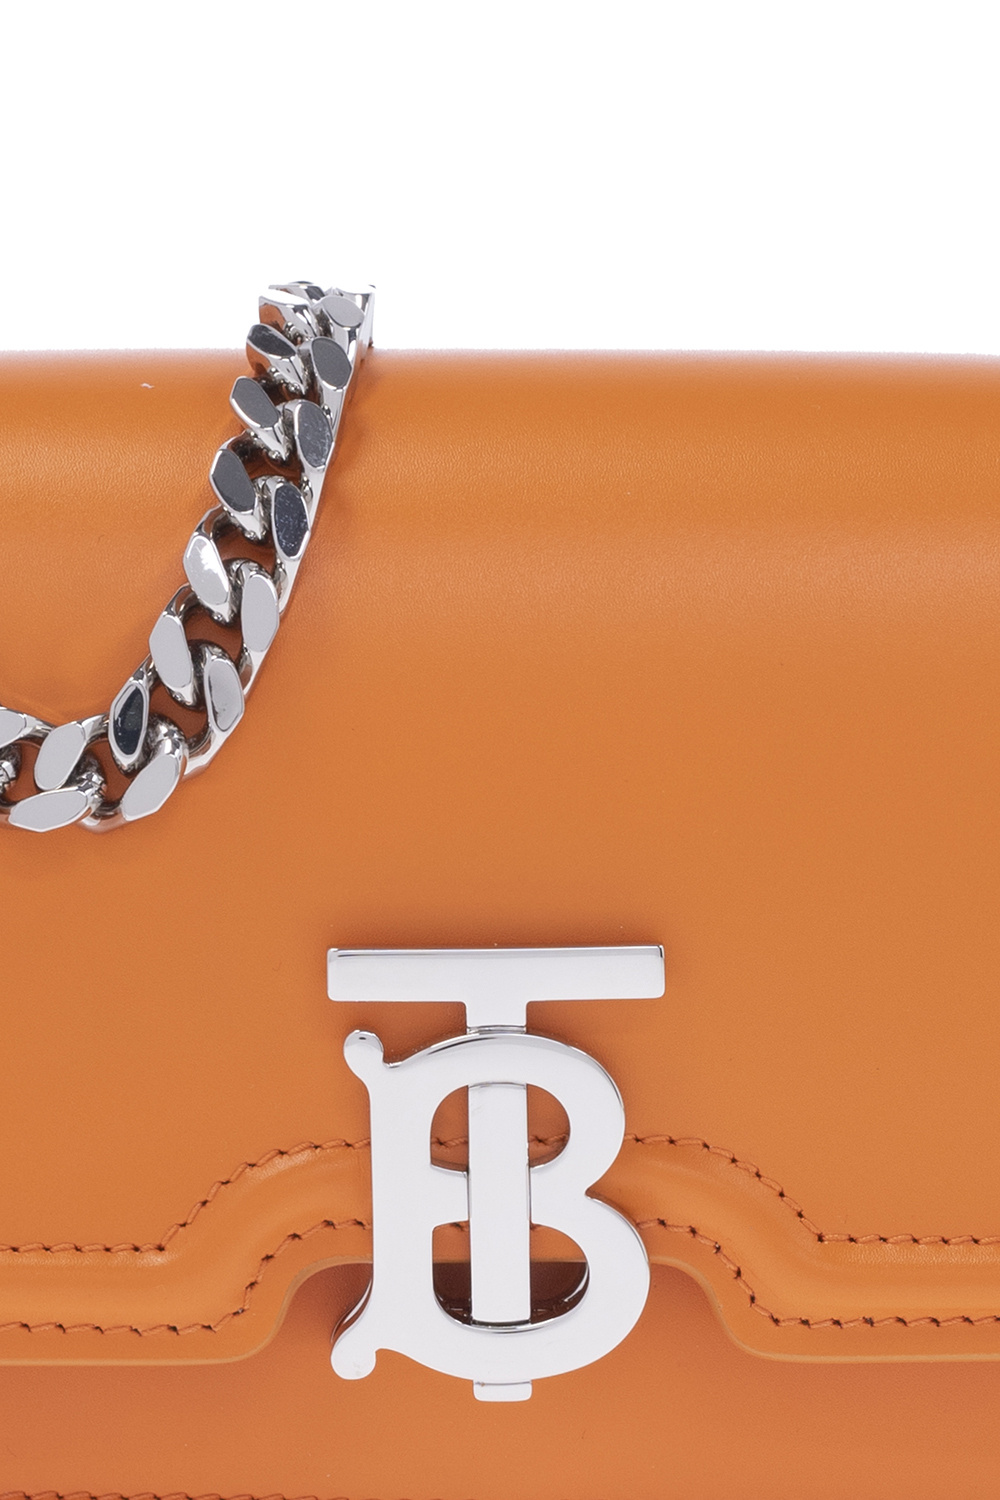 Burberry Mini Chain Tb Crossbody Bag in Orange